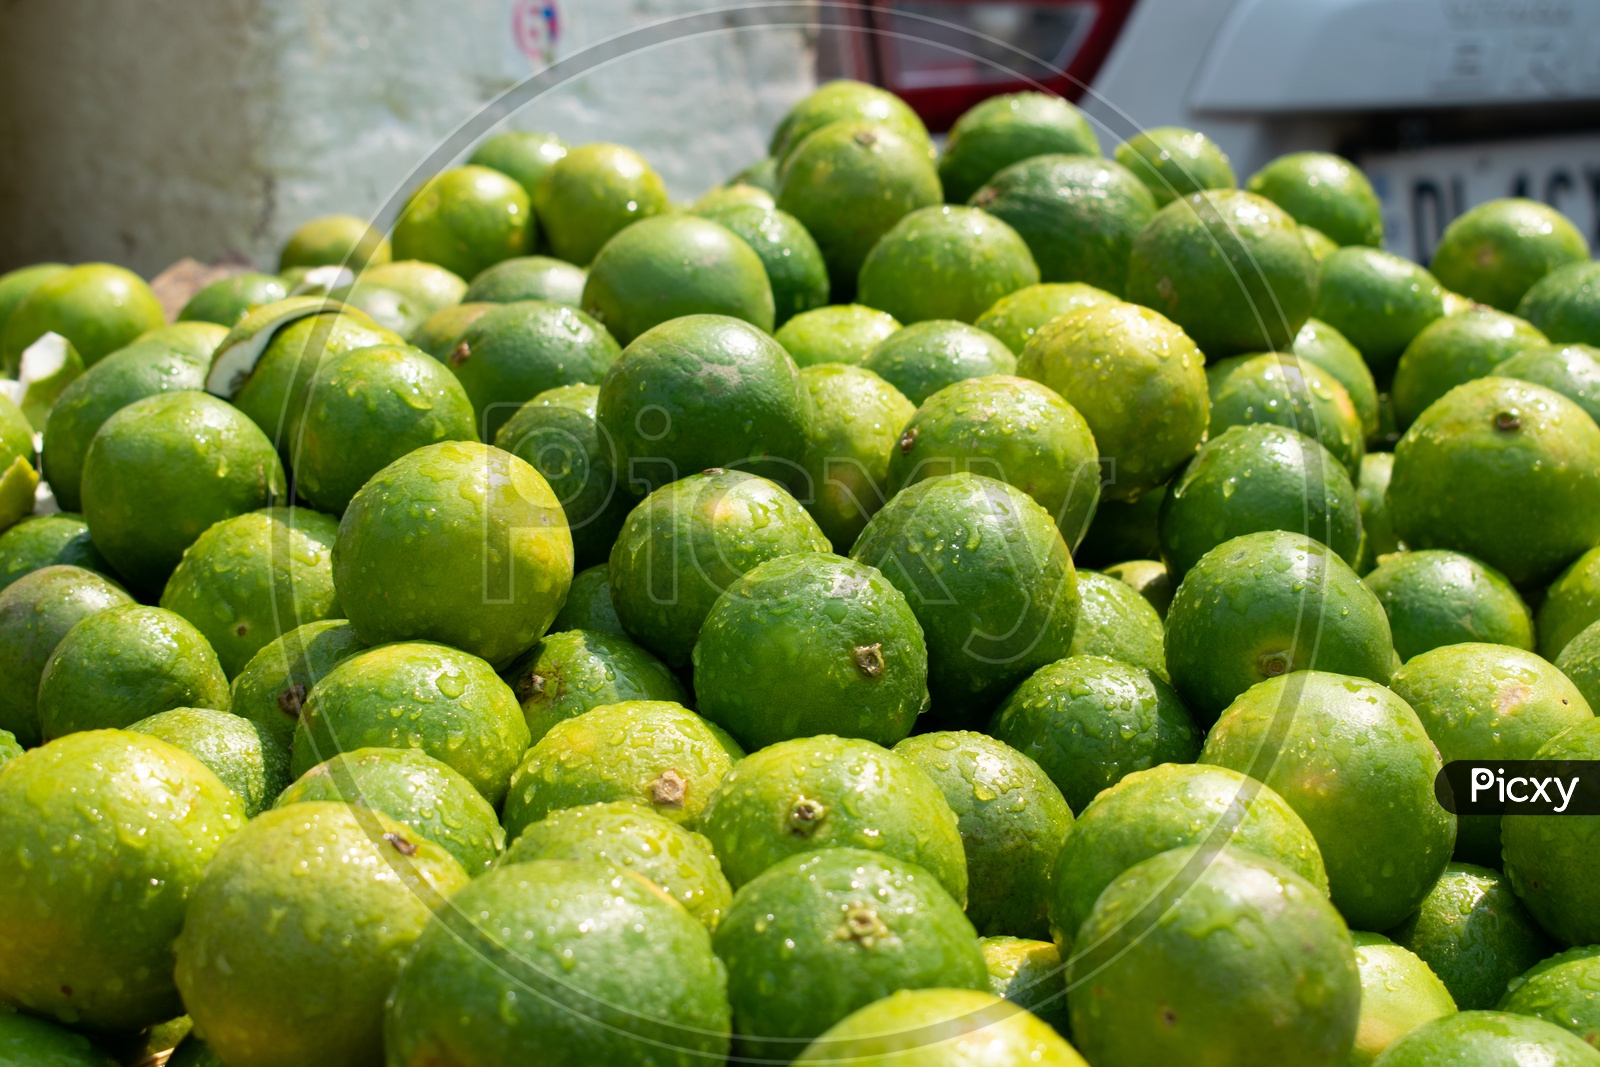 Musambi(sweet lime, sweet lemon or sweet limetta) at the shop of Juicewala